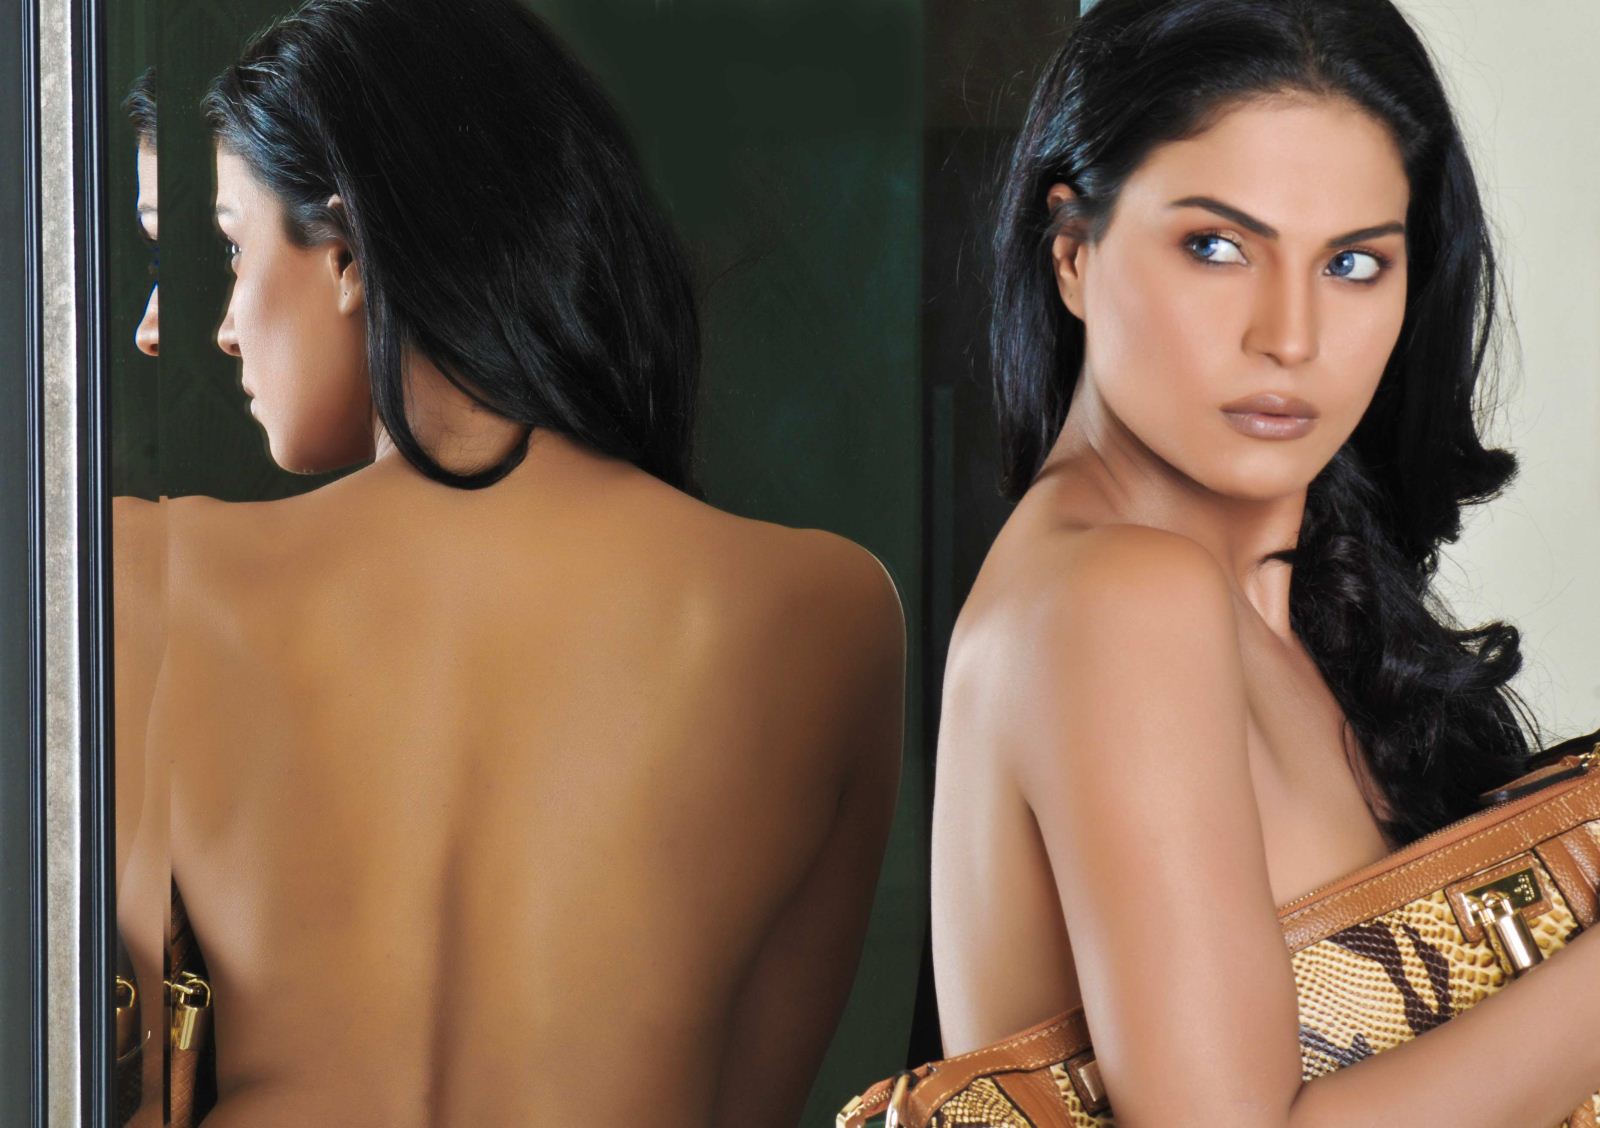 Veena Malik said that Kareena is the real heroine of Bollywood